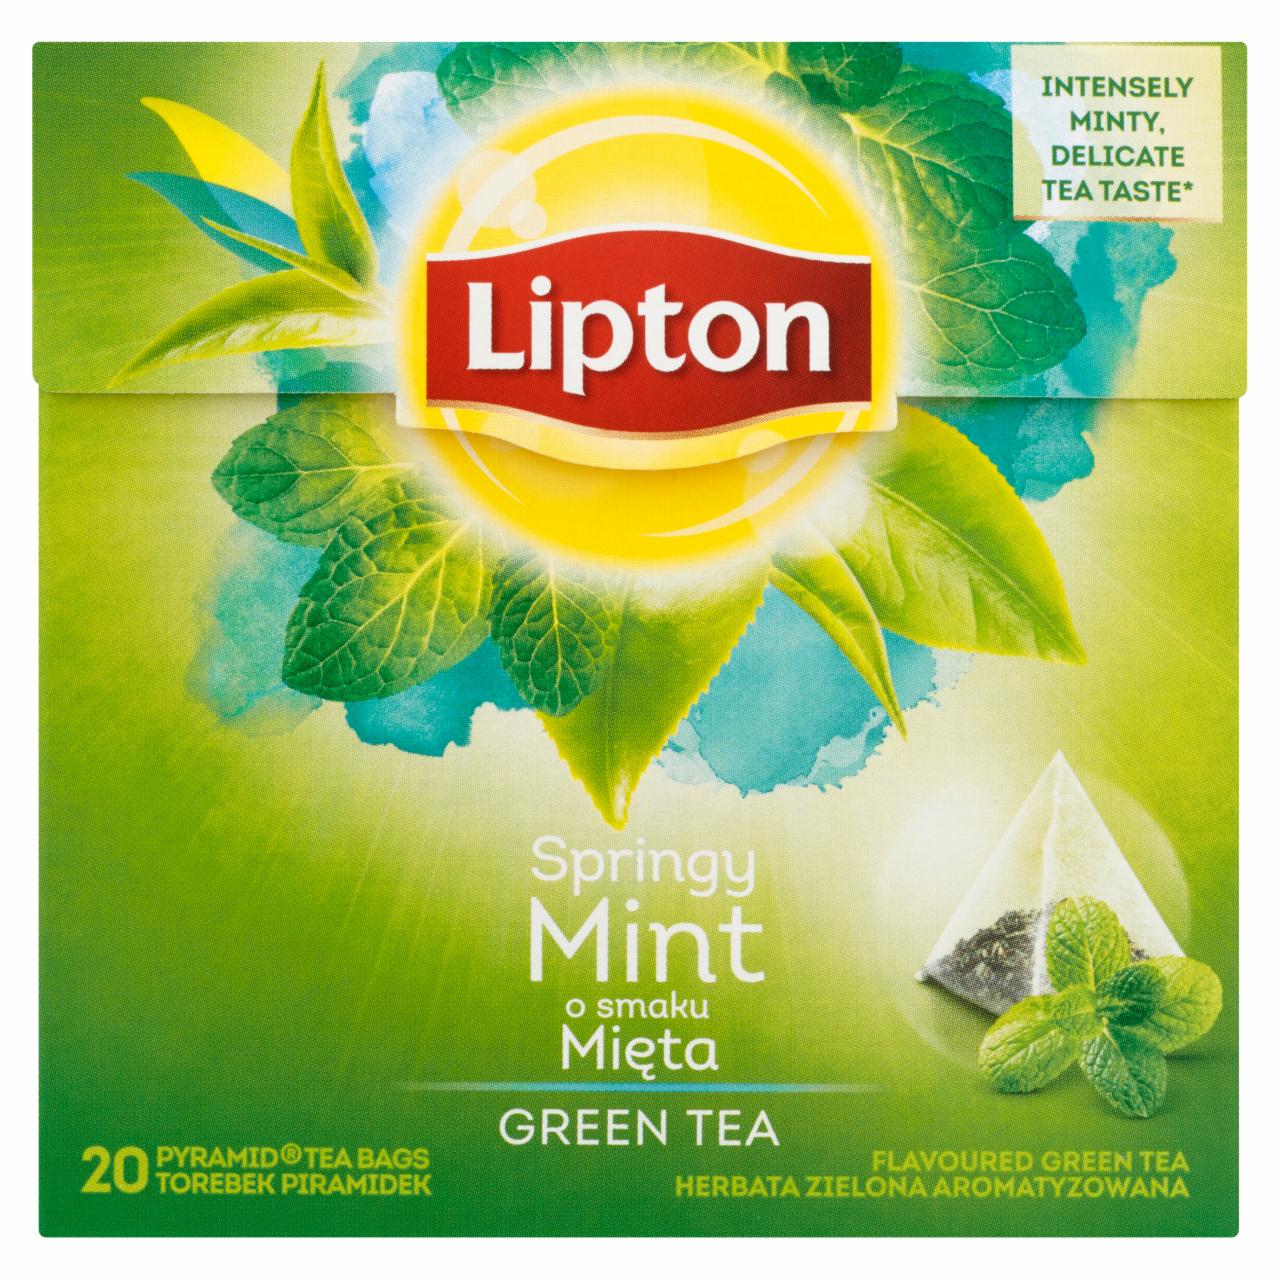 Zdjęcia - Lipton o smaku Mięta Herbata zielona aromatyzowana 32 g (20 torebek)